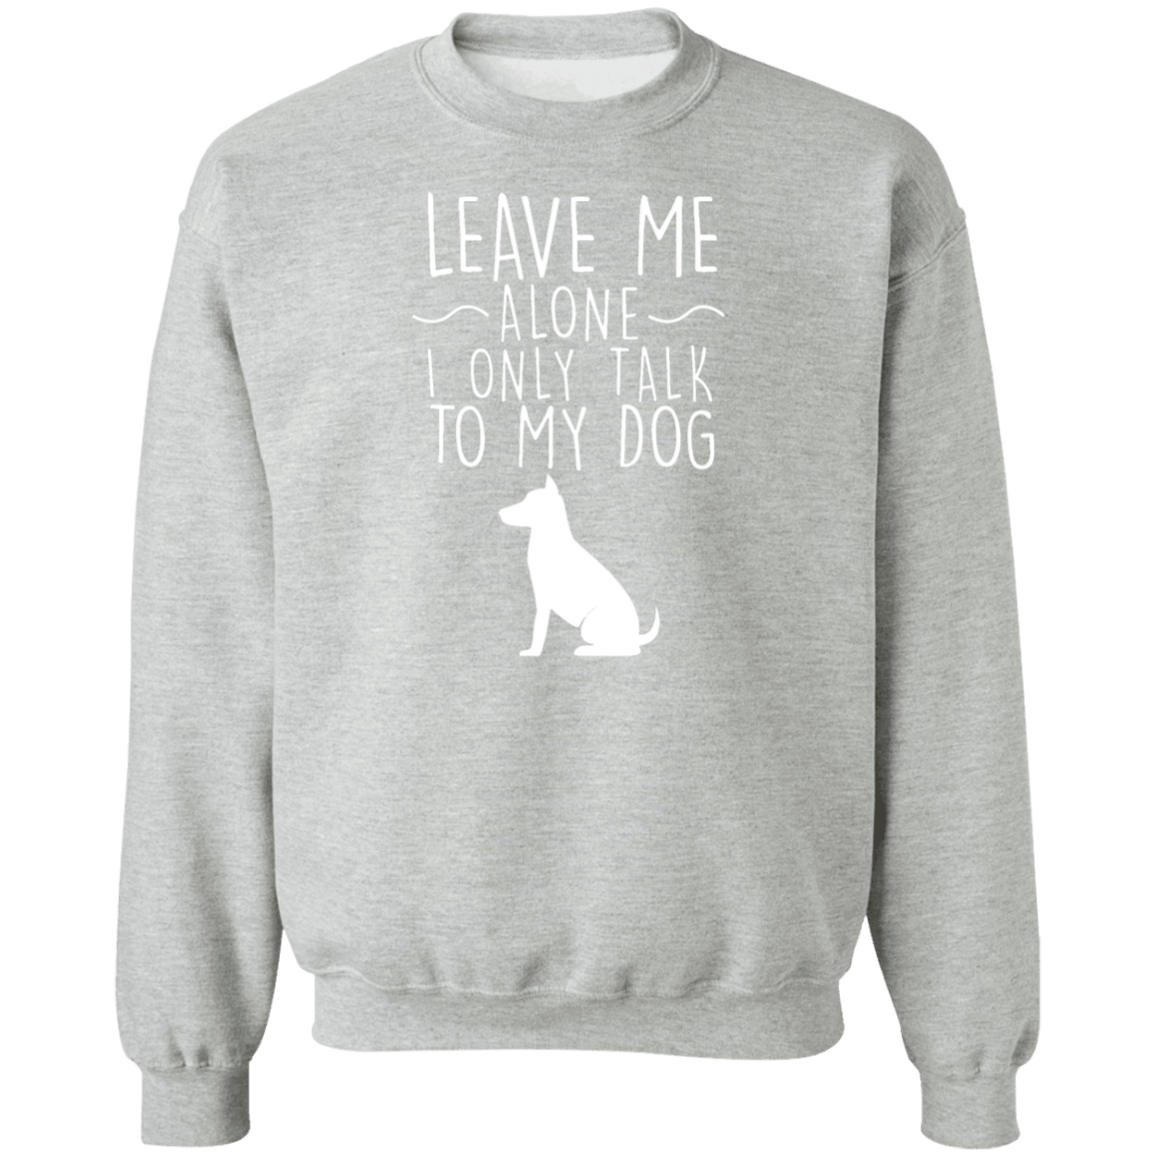 Leave Me Alone - Sweatshirt.